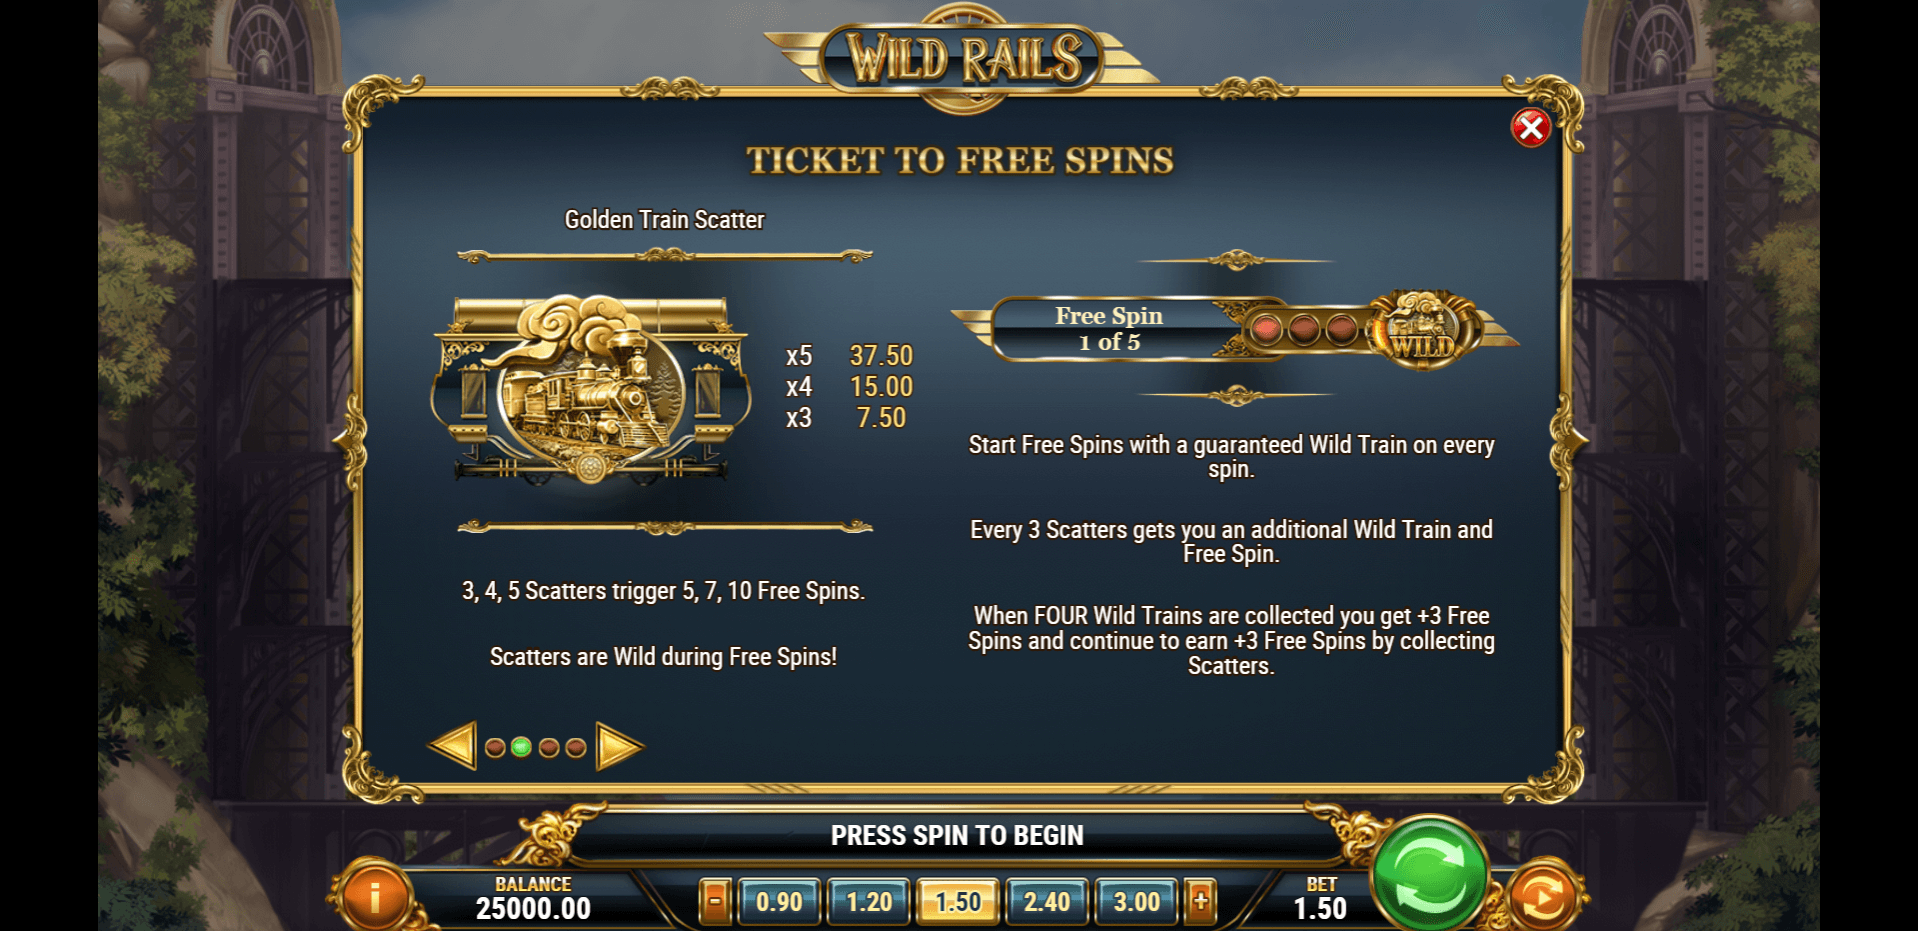 wild rails slot machine detail image 1